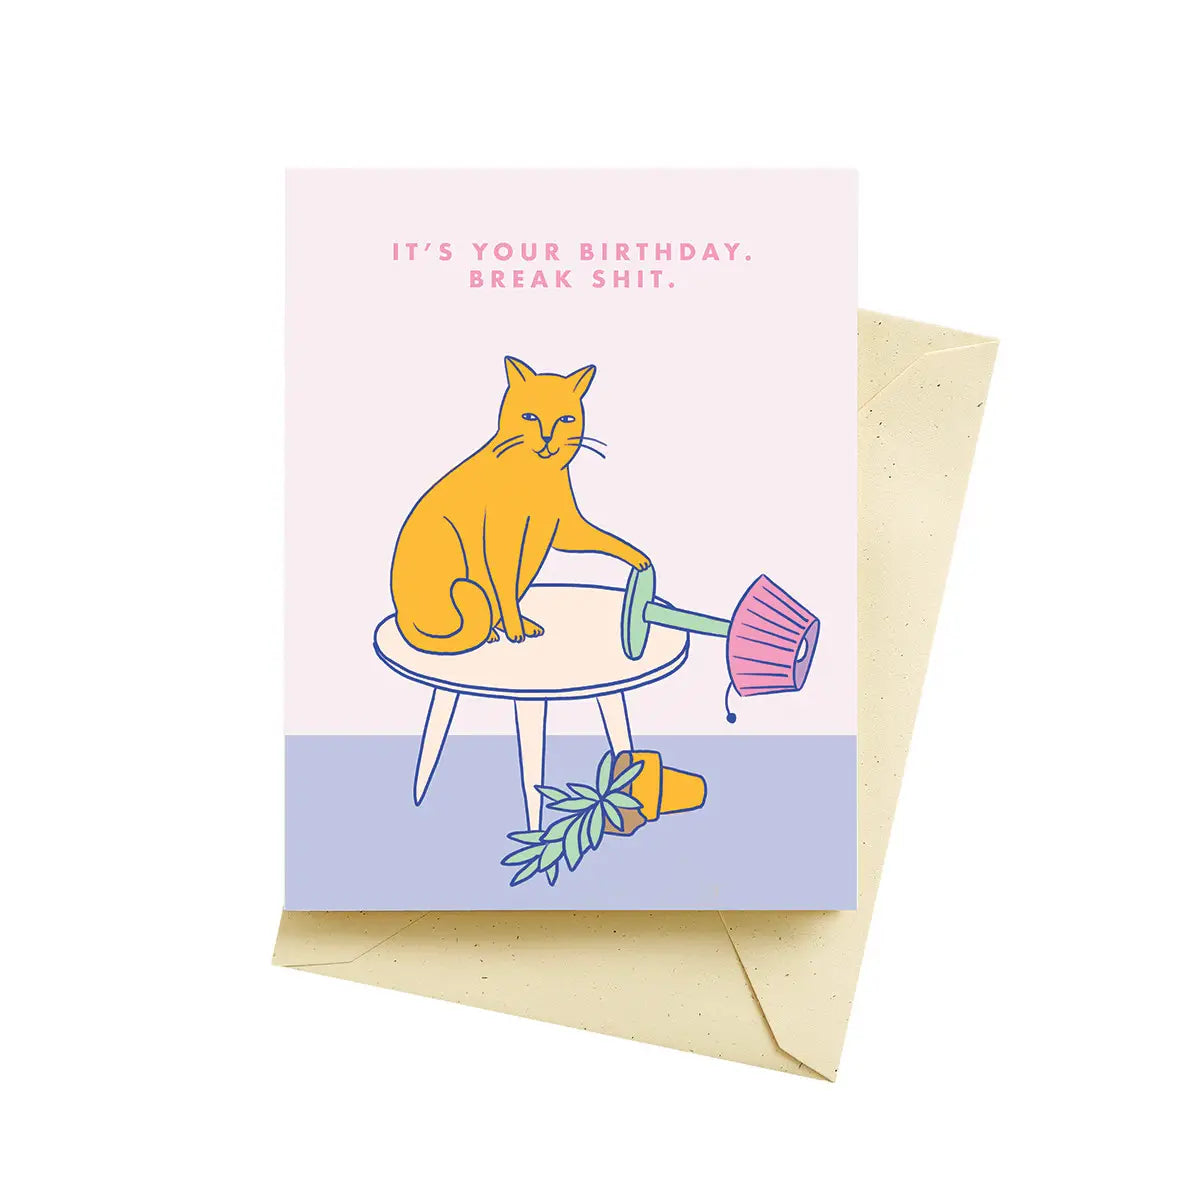 Break Shit - Birthday Card